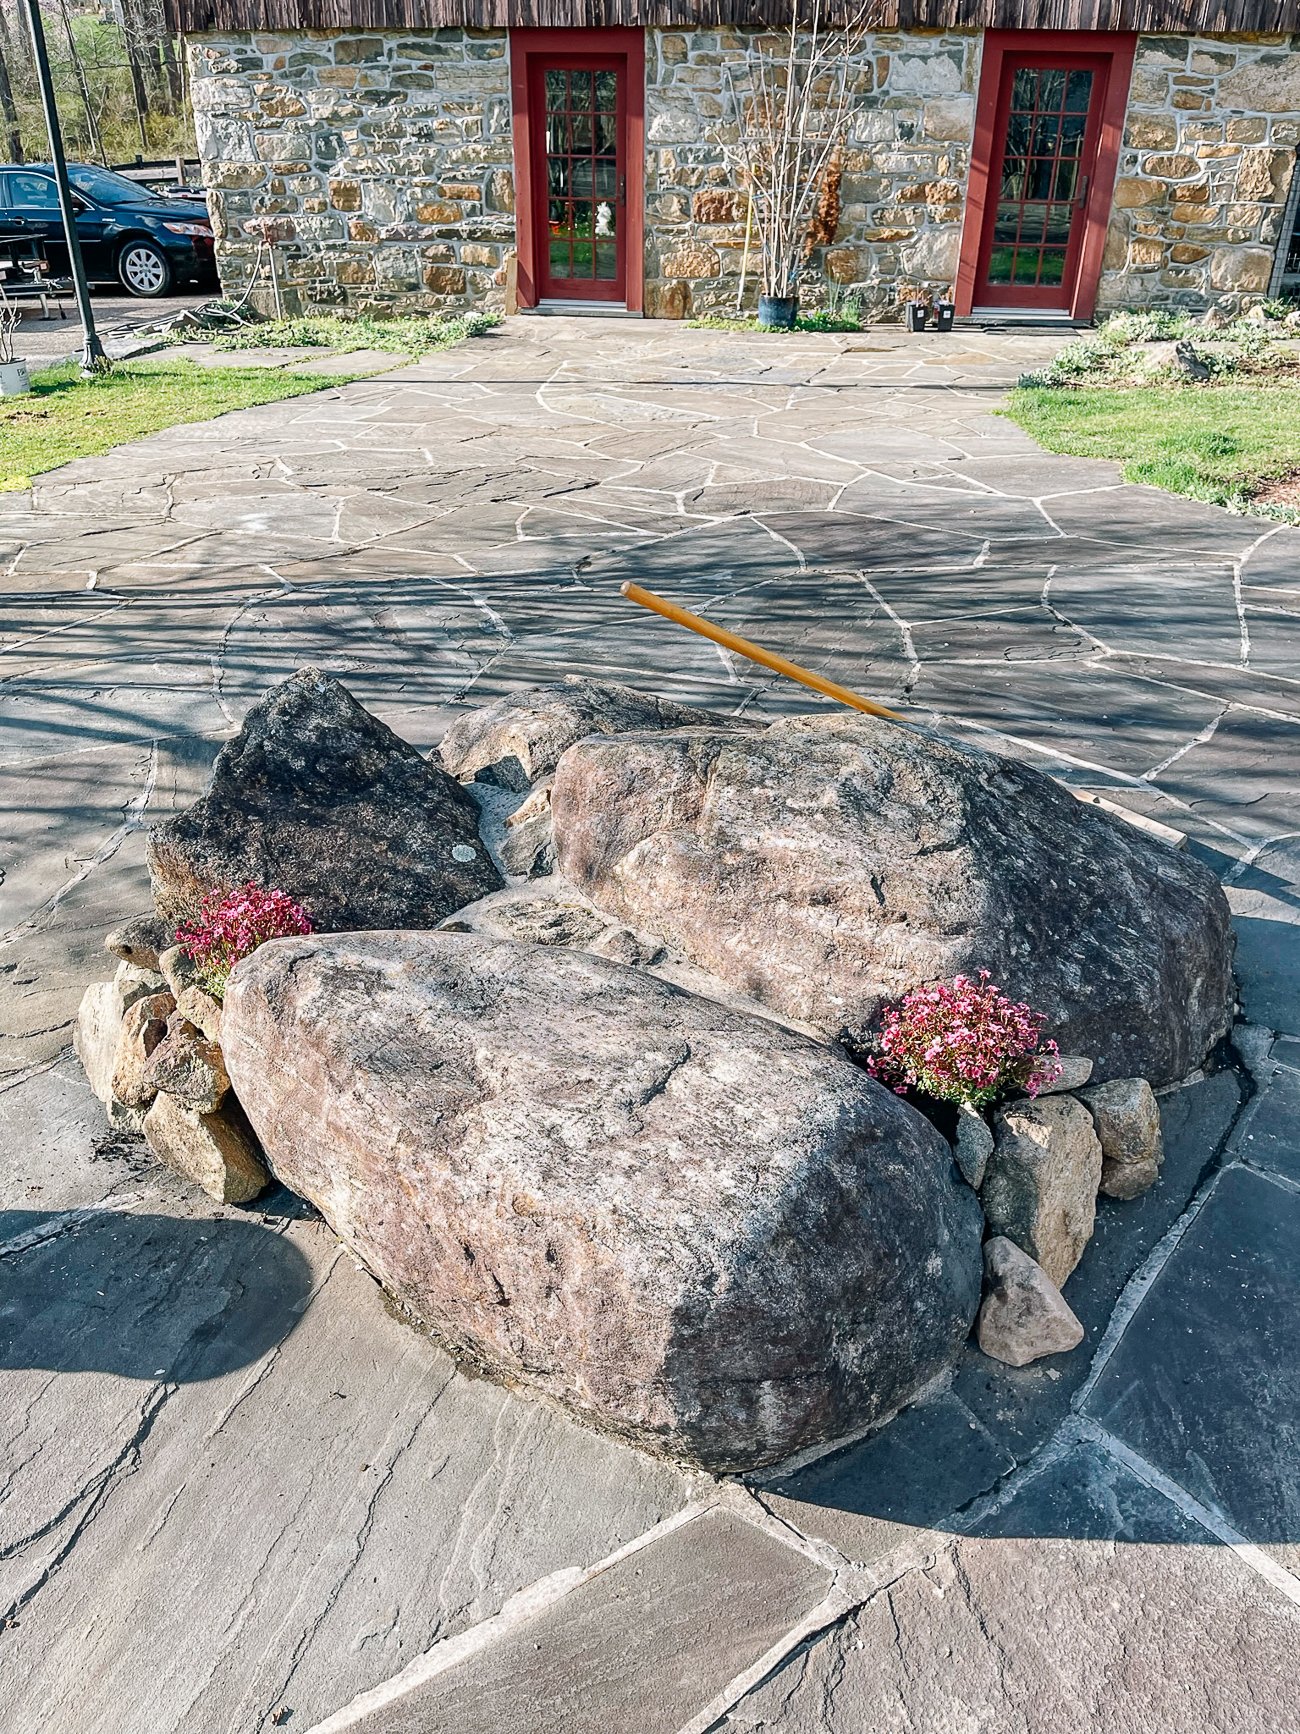 pink rockfoil in rock garden area